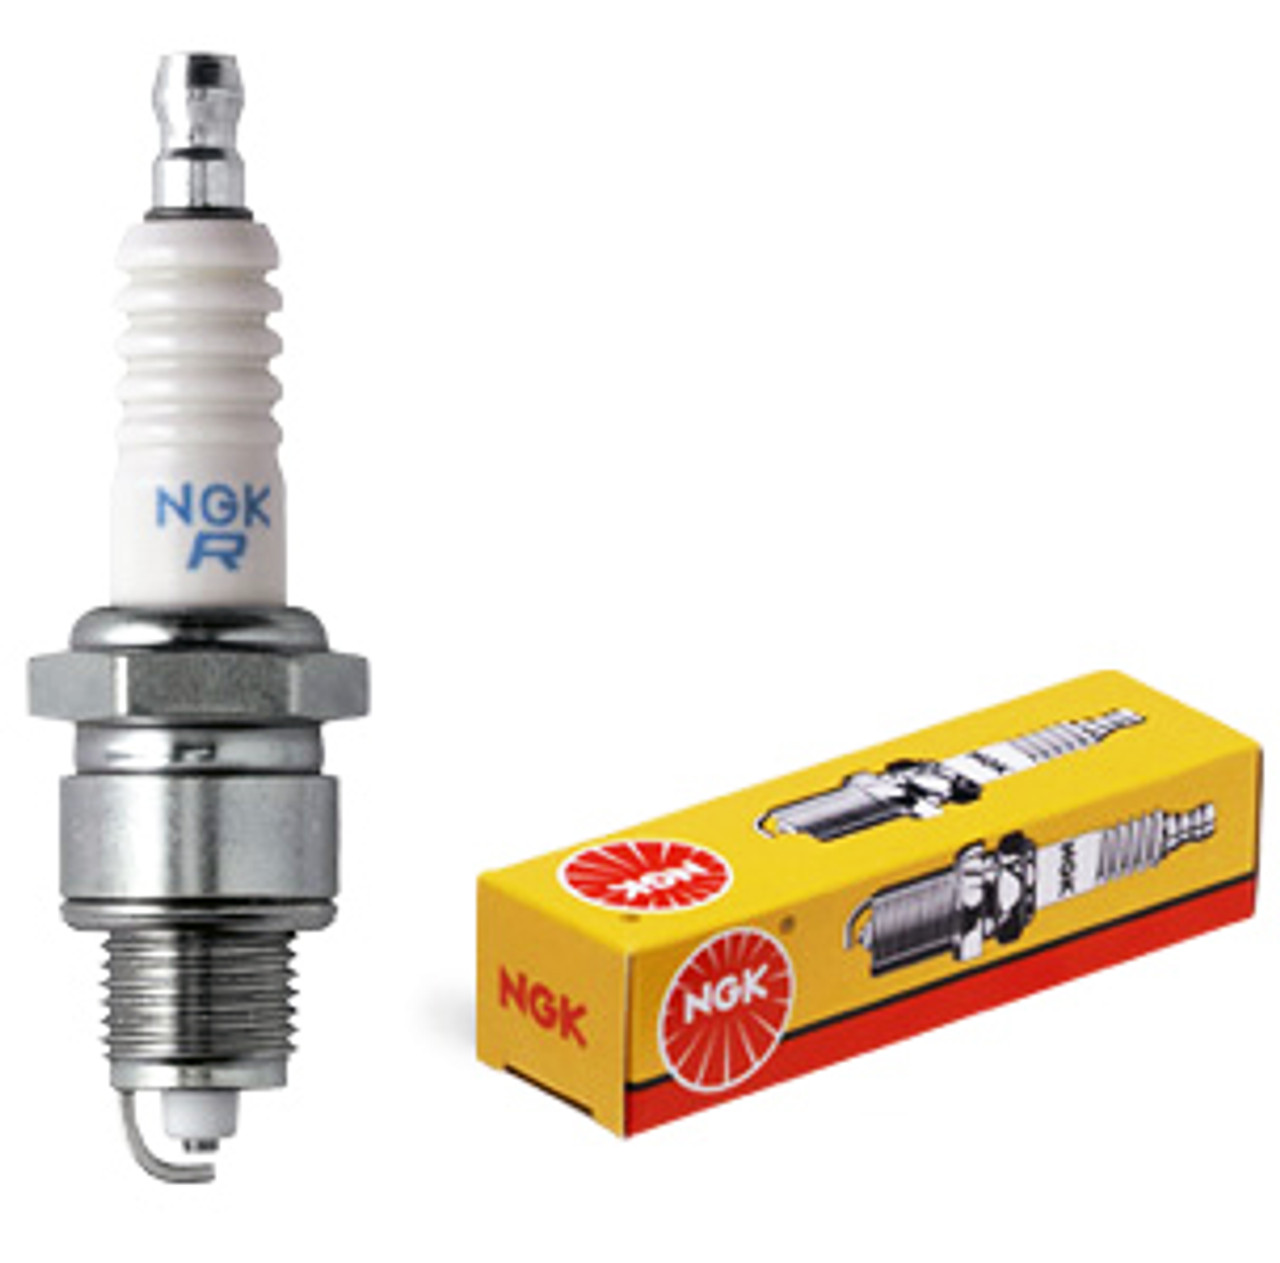 Perplejo Almuerzo eficaz Buy NGK Spark Plug CR9E SKU: 553145 at the price of US$ 8.95 |  BrocksPerformance.com